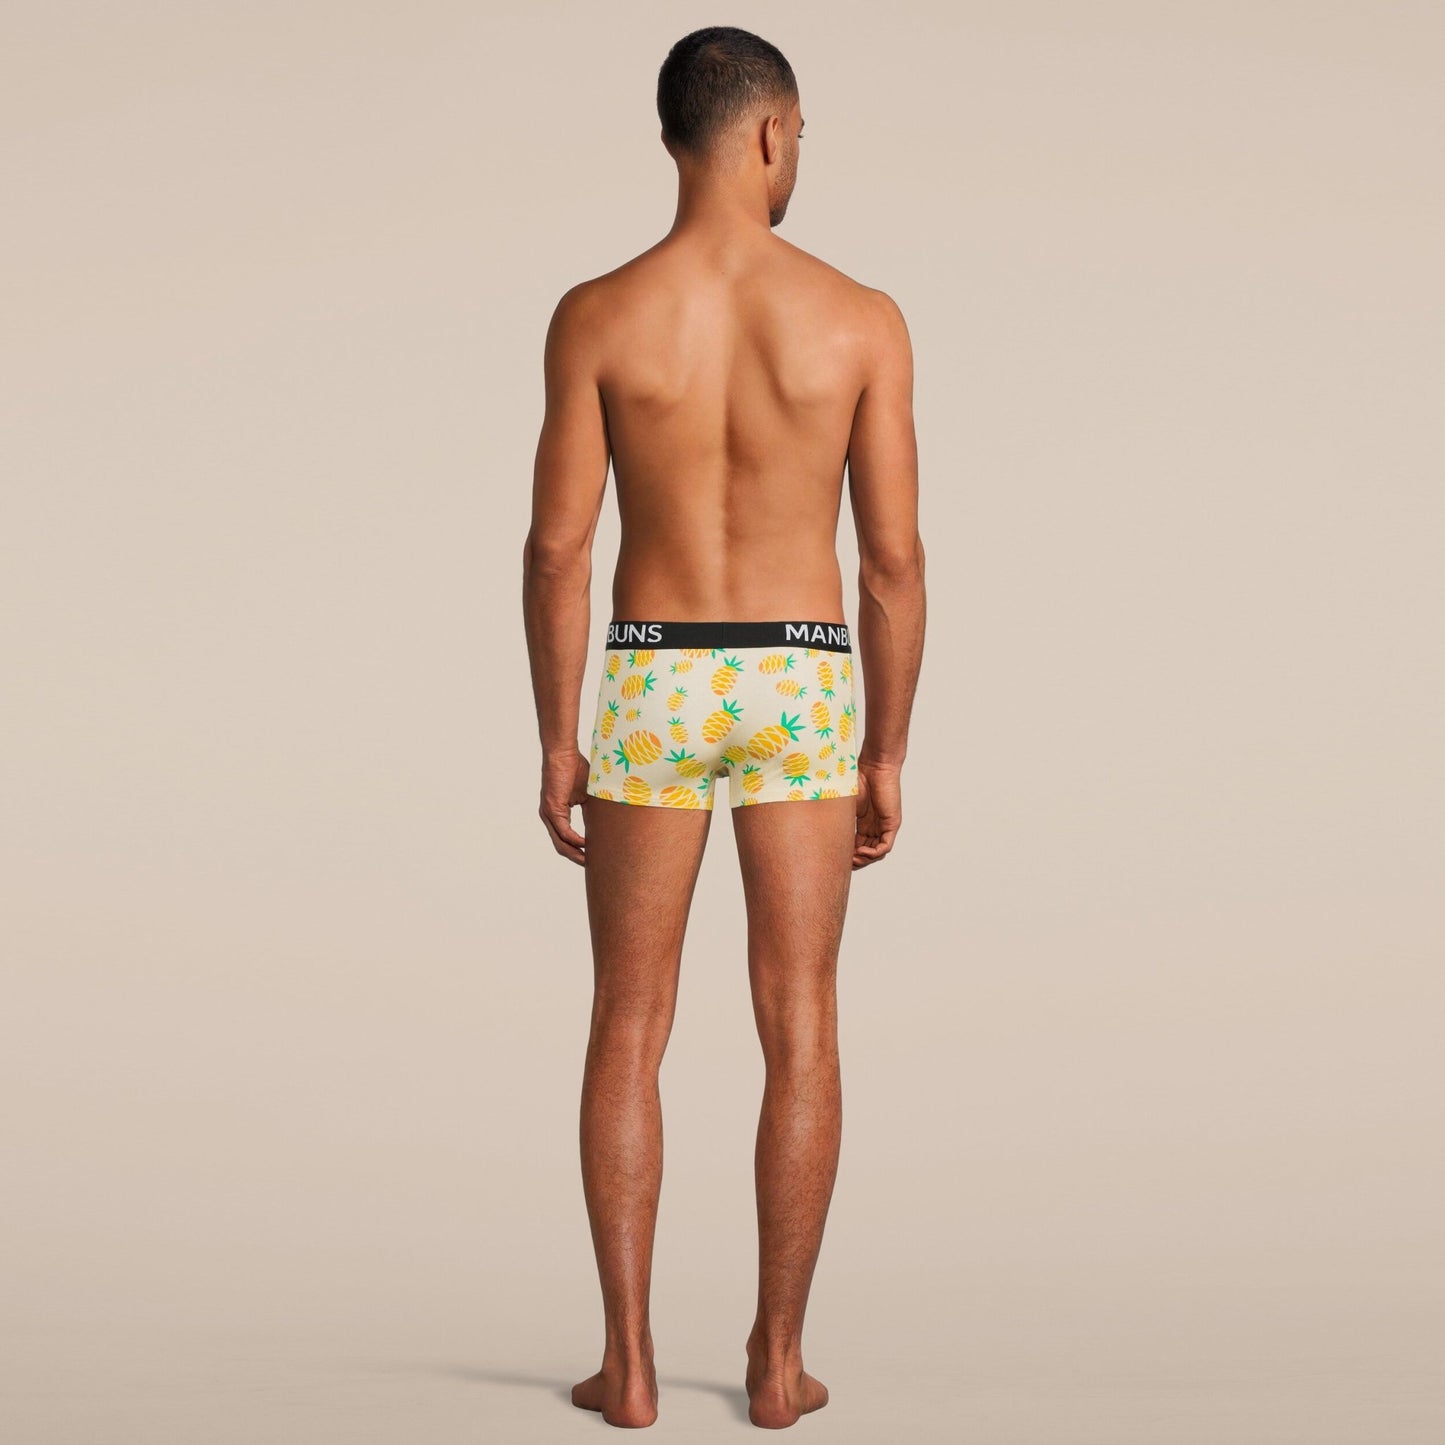 Men's Pineapple Boxer Trunk Underwear - MANBUNS Underwear & Socks Free Shipping